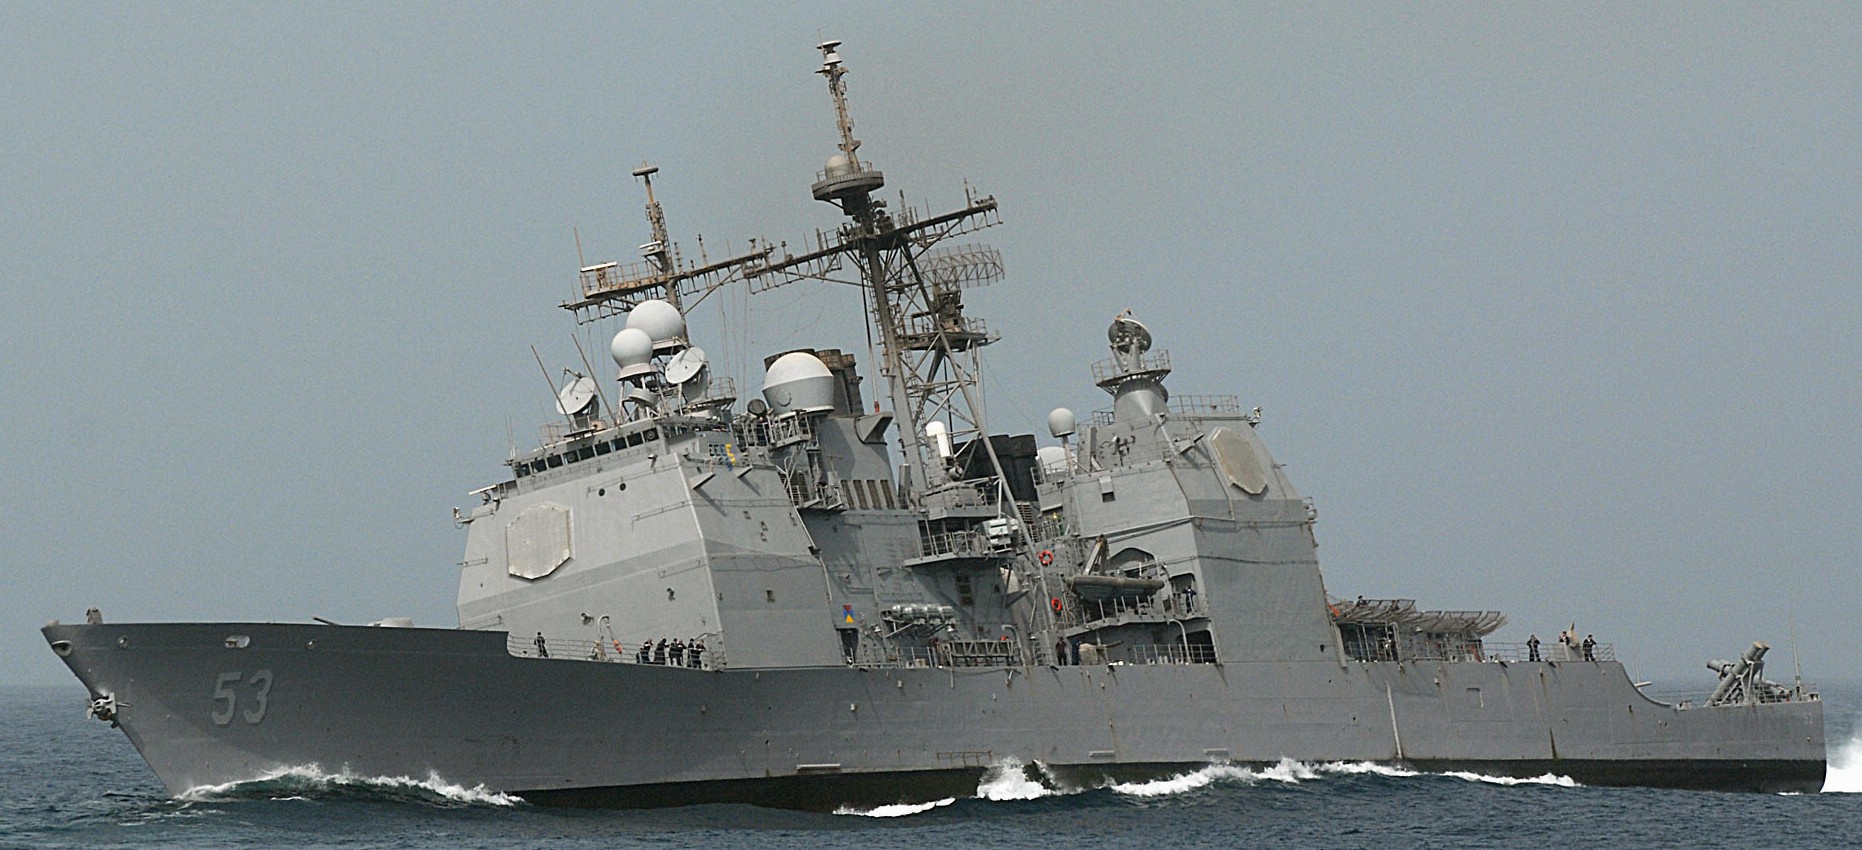 cg-53 uss mobile bay ticonderoga class guided missile cruiser aegis us navy arabian sea 43